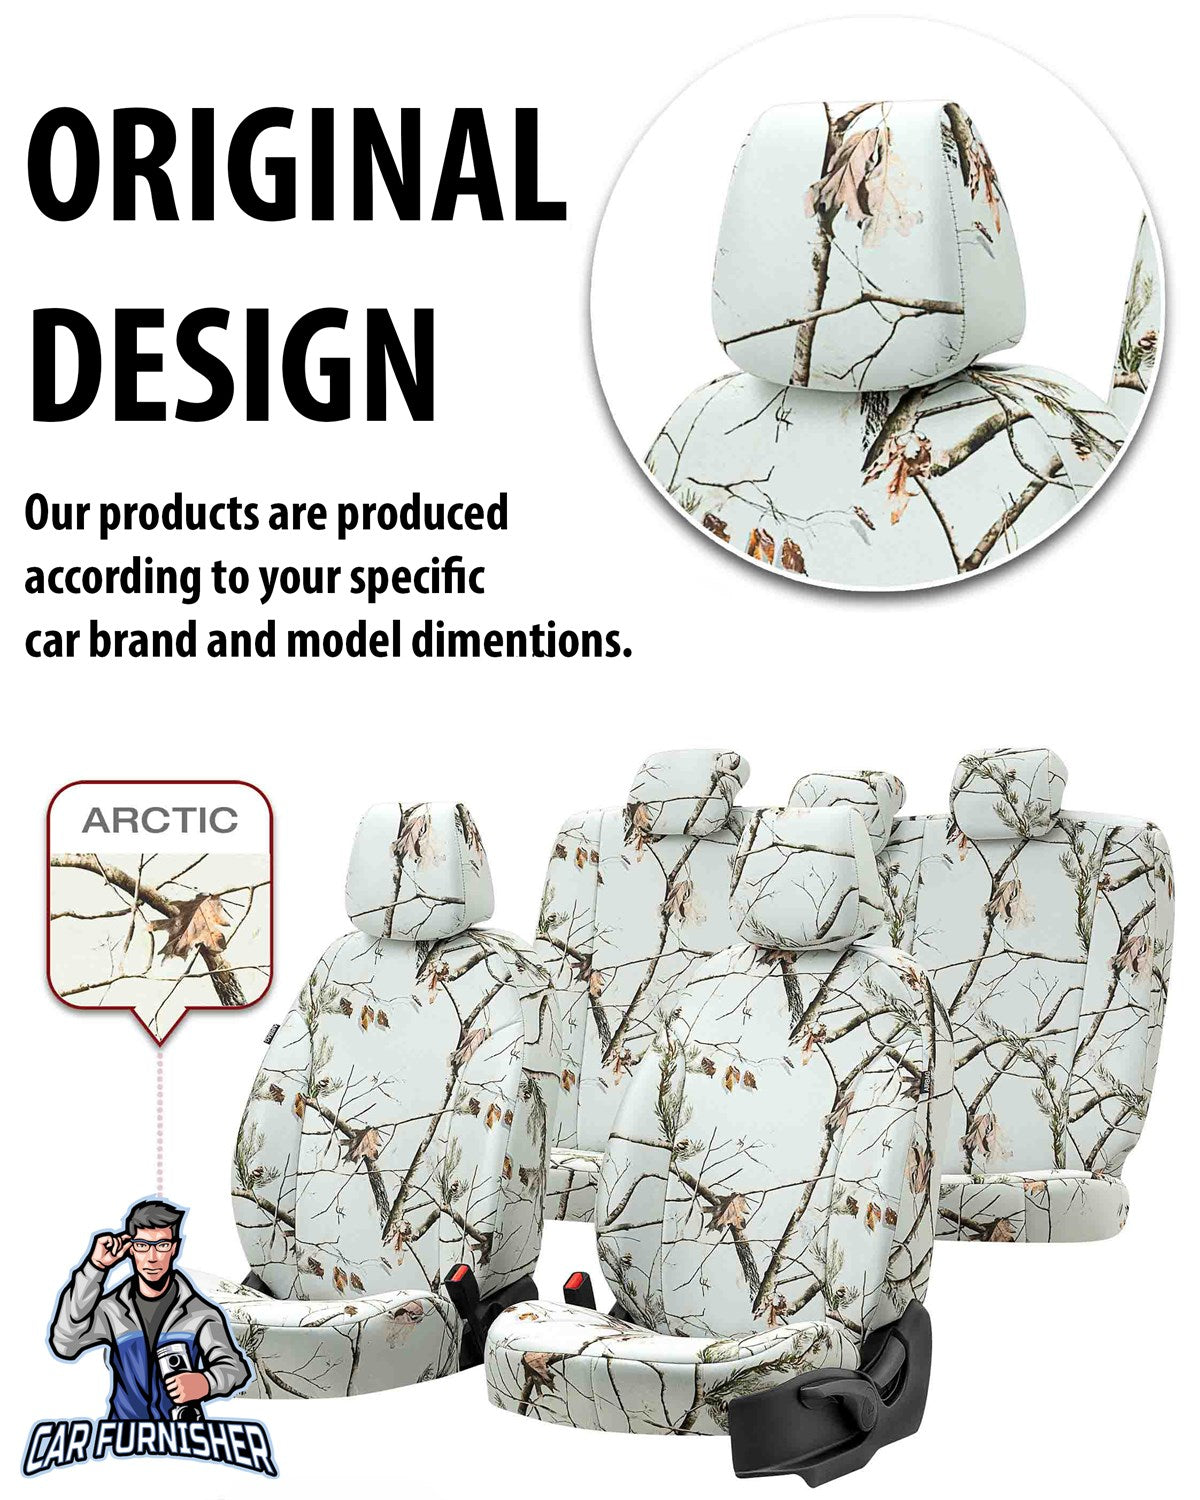 Ssangyong Korando Seat Covers Camouflage Waterproof Design Fuji Camo Waterproof Fabric